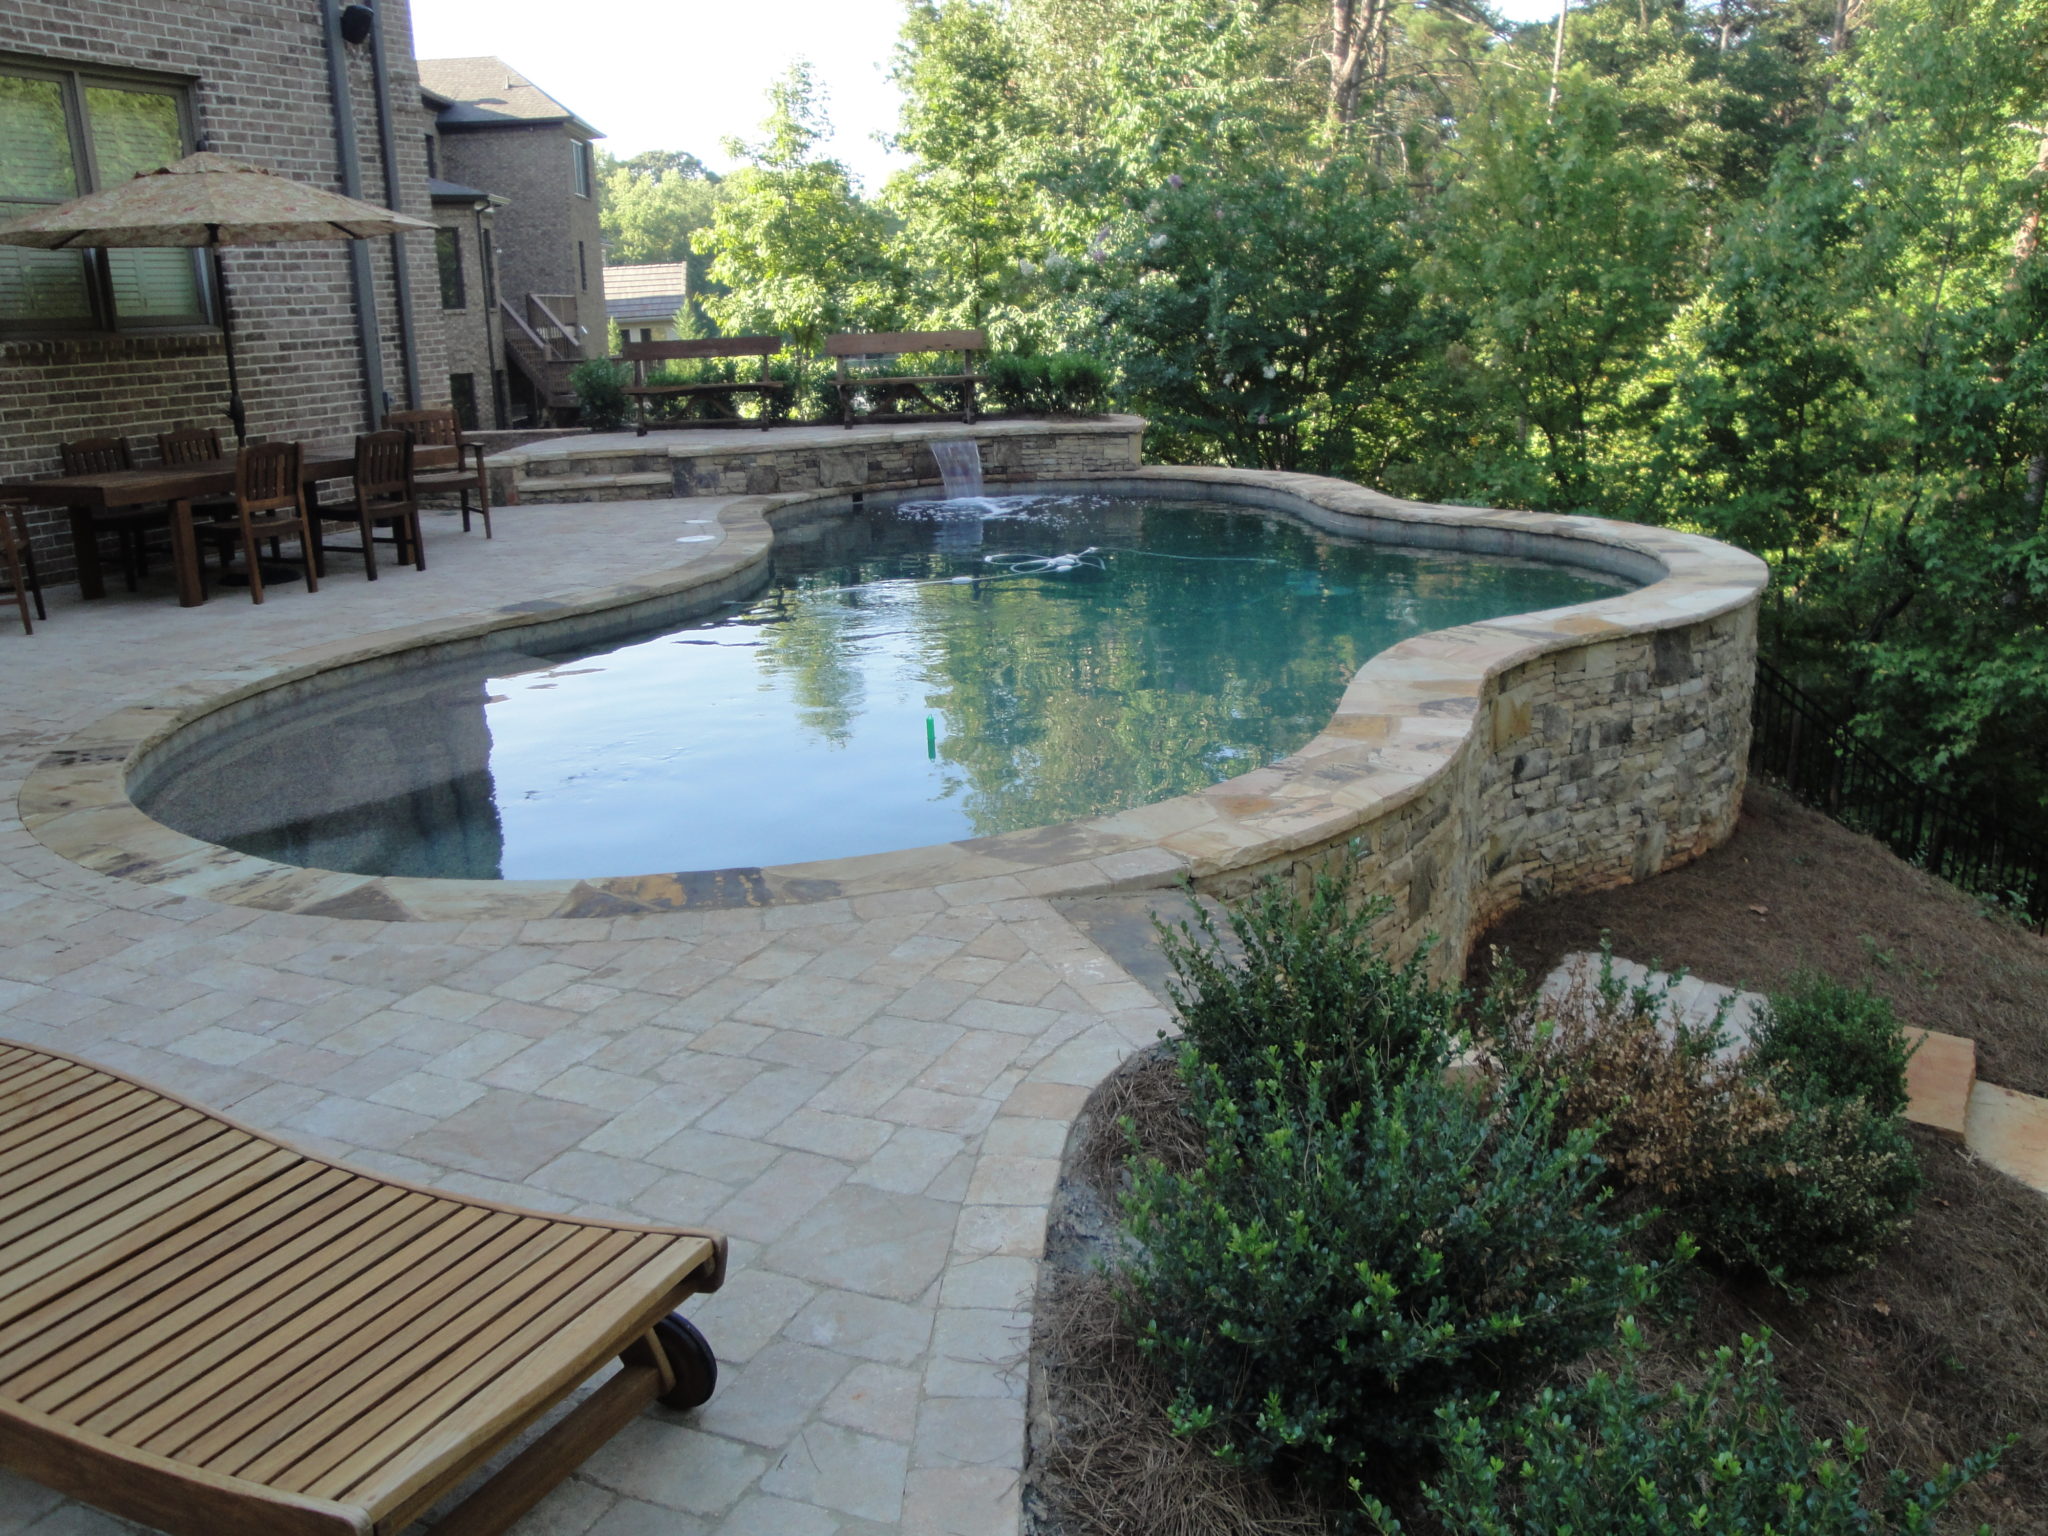 A sleek and stylish modern freeform pool design.